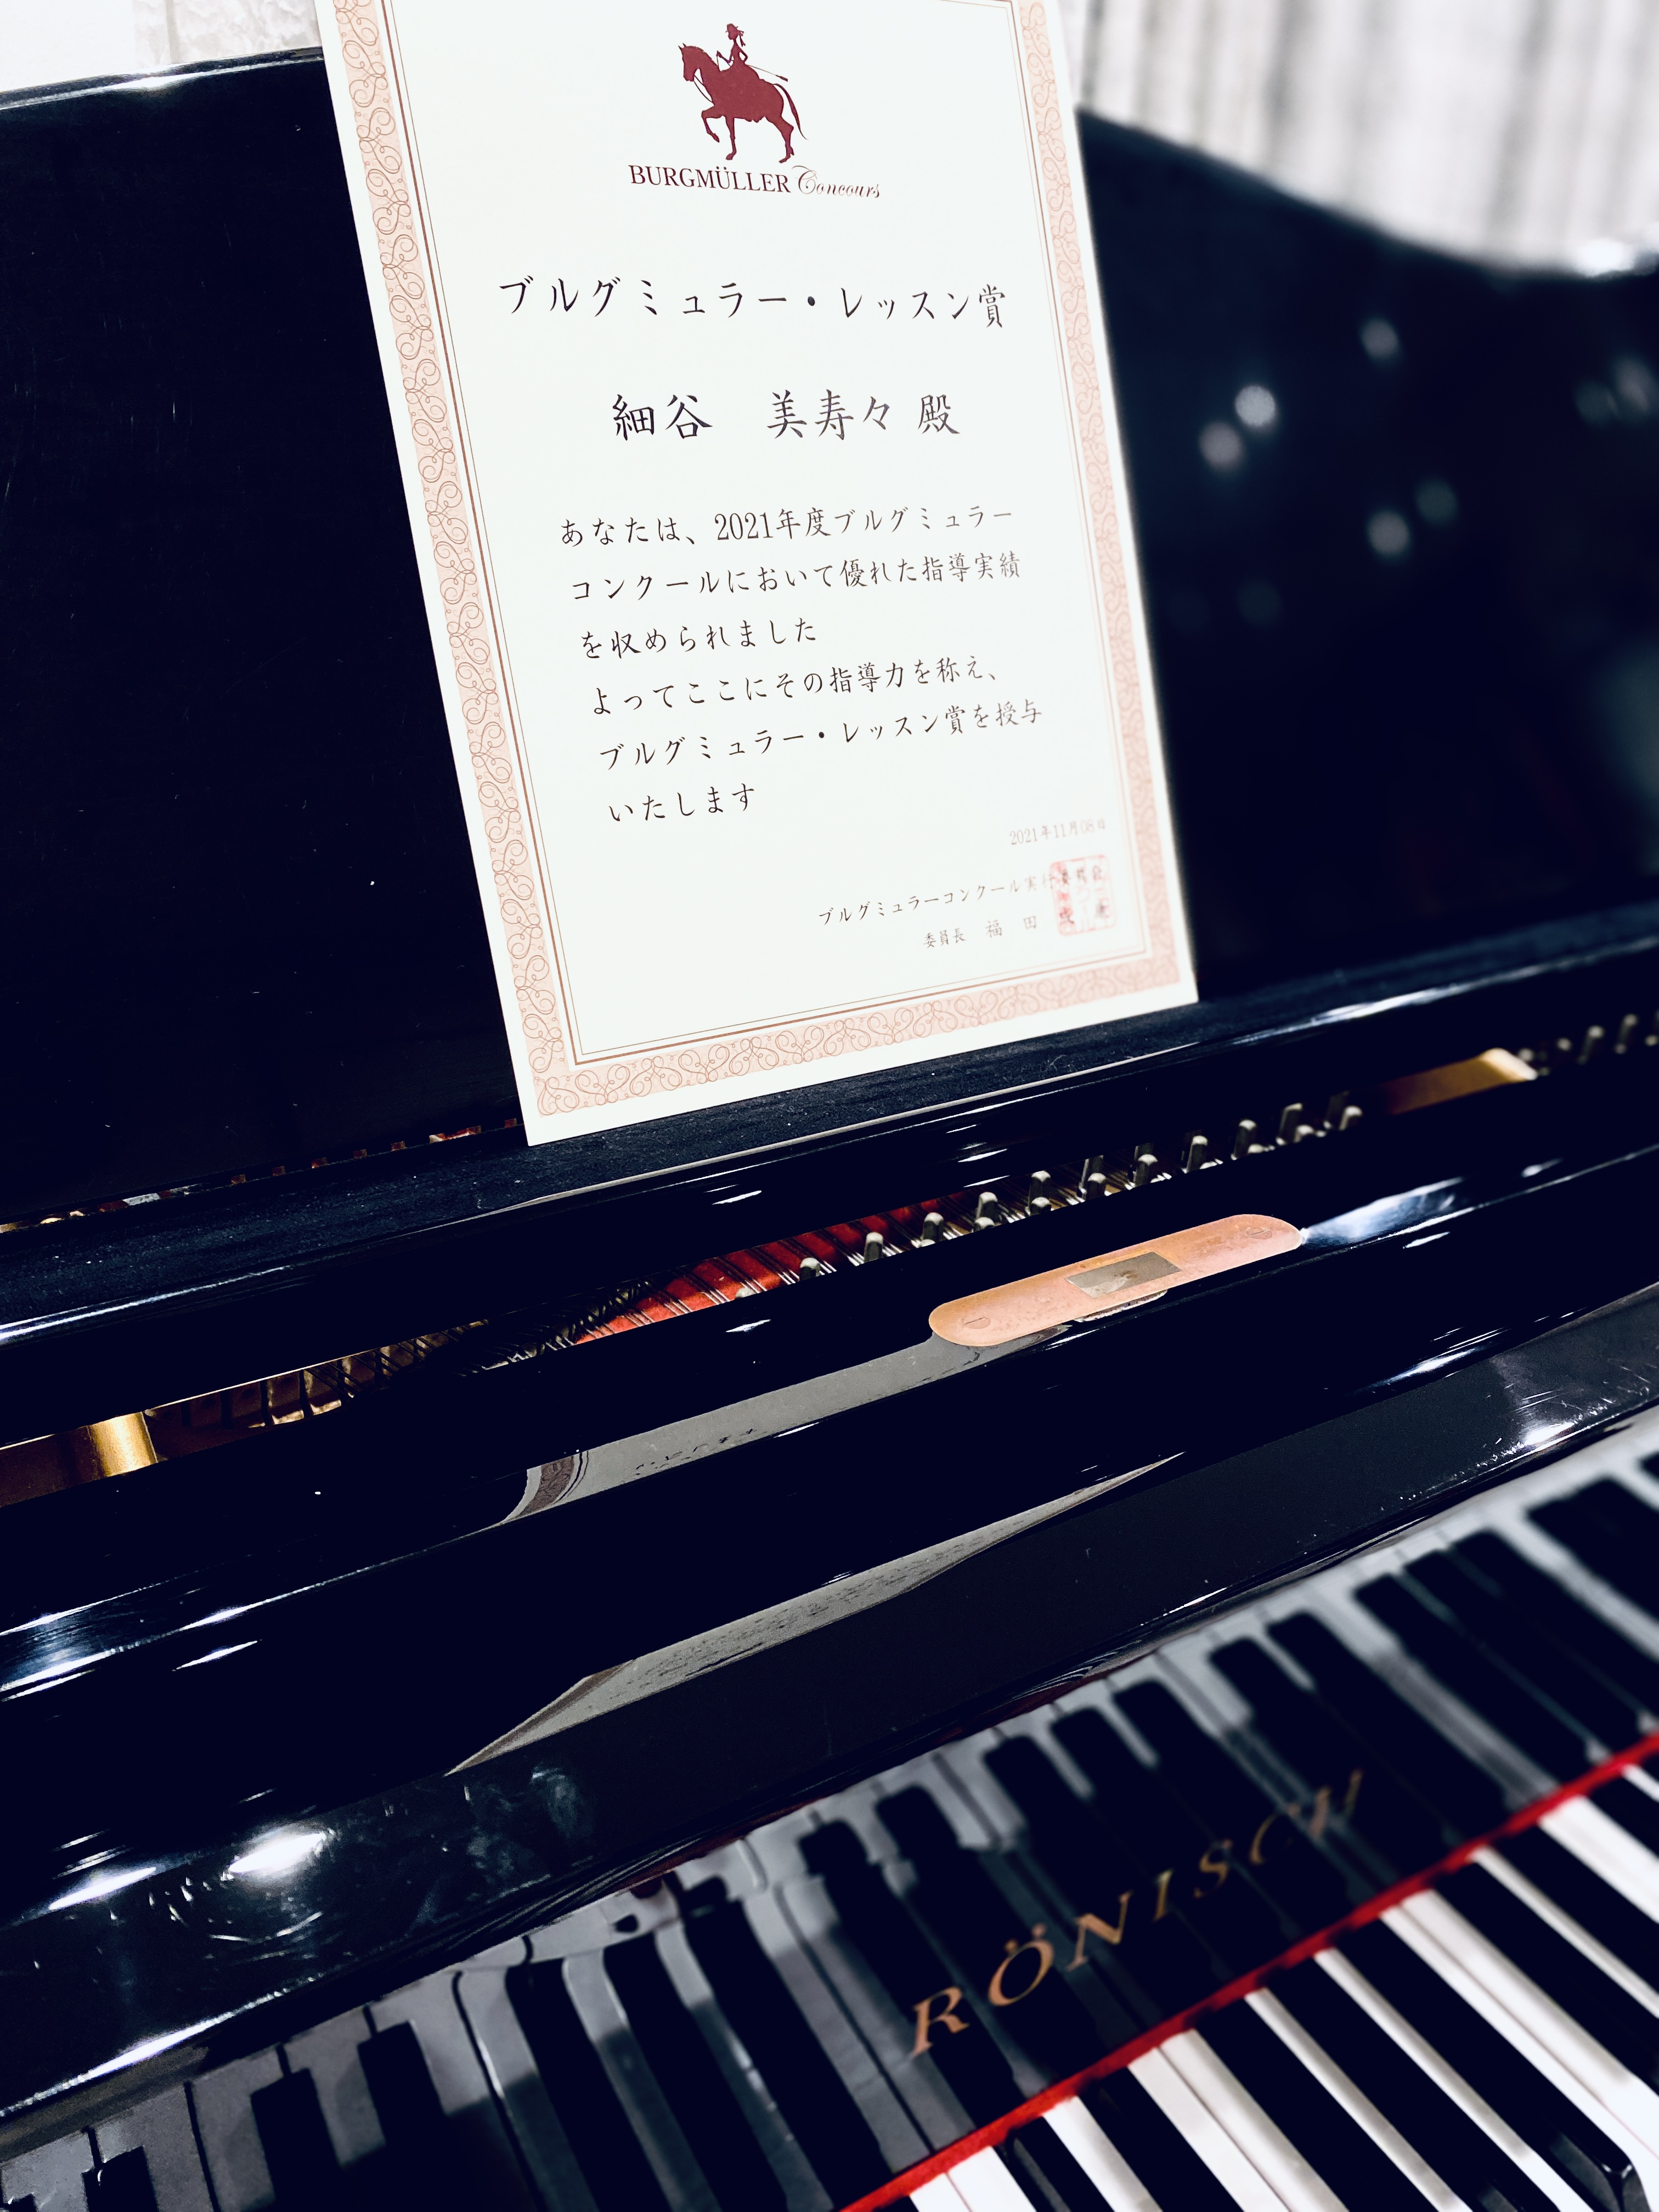 IMG_7531.jpg alt="Misuzu Music House細谷美寿々。ブルグミュラーコンクールにてレッスン賞をいただｋいました"